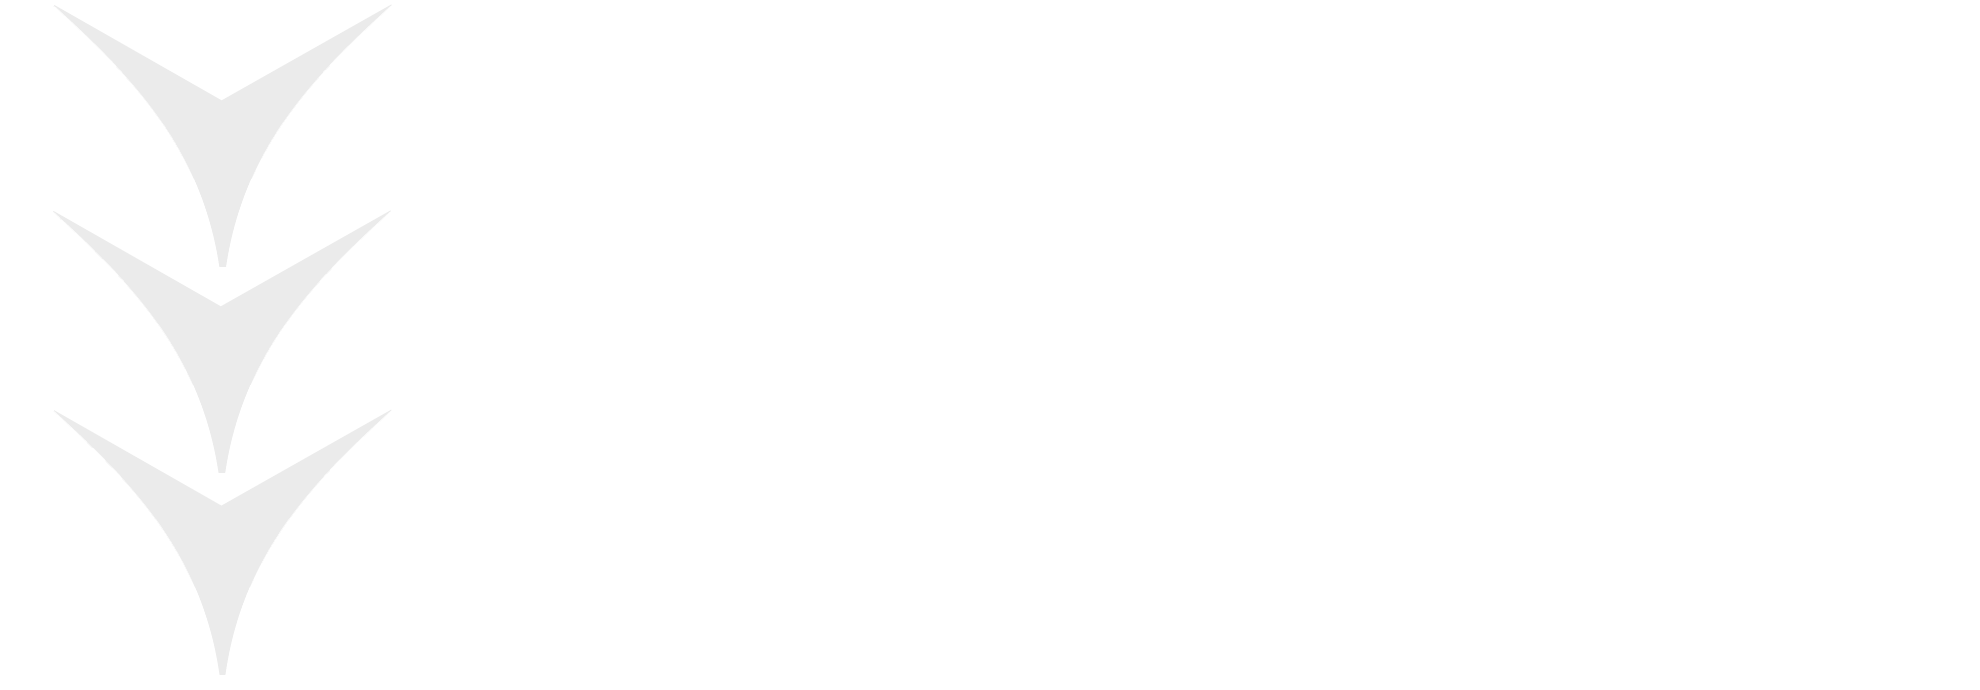 cropped-Logo-BASFOOD-BW.png